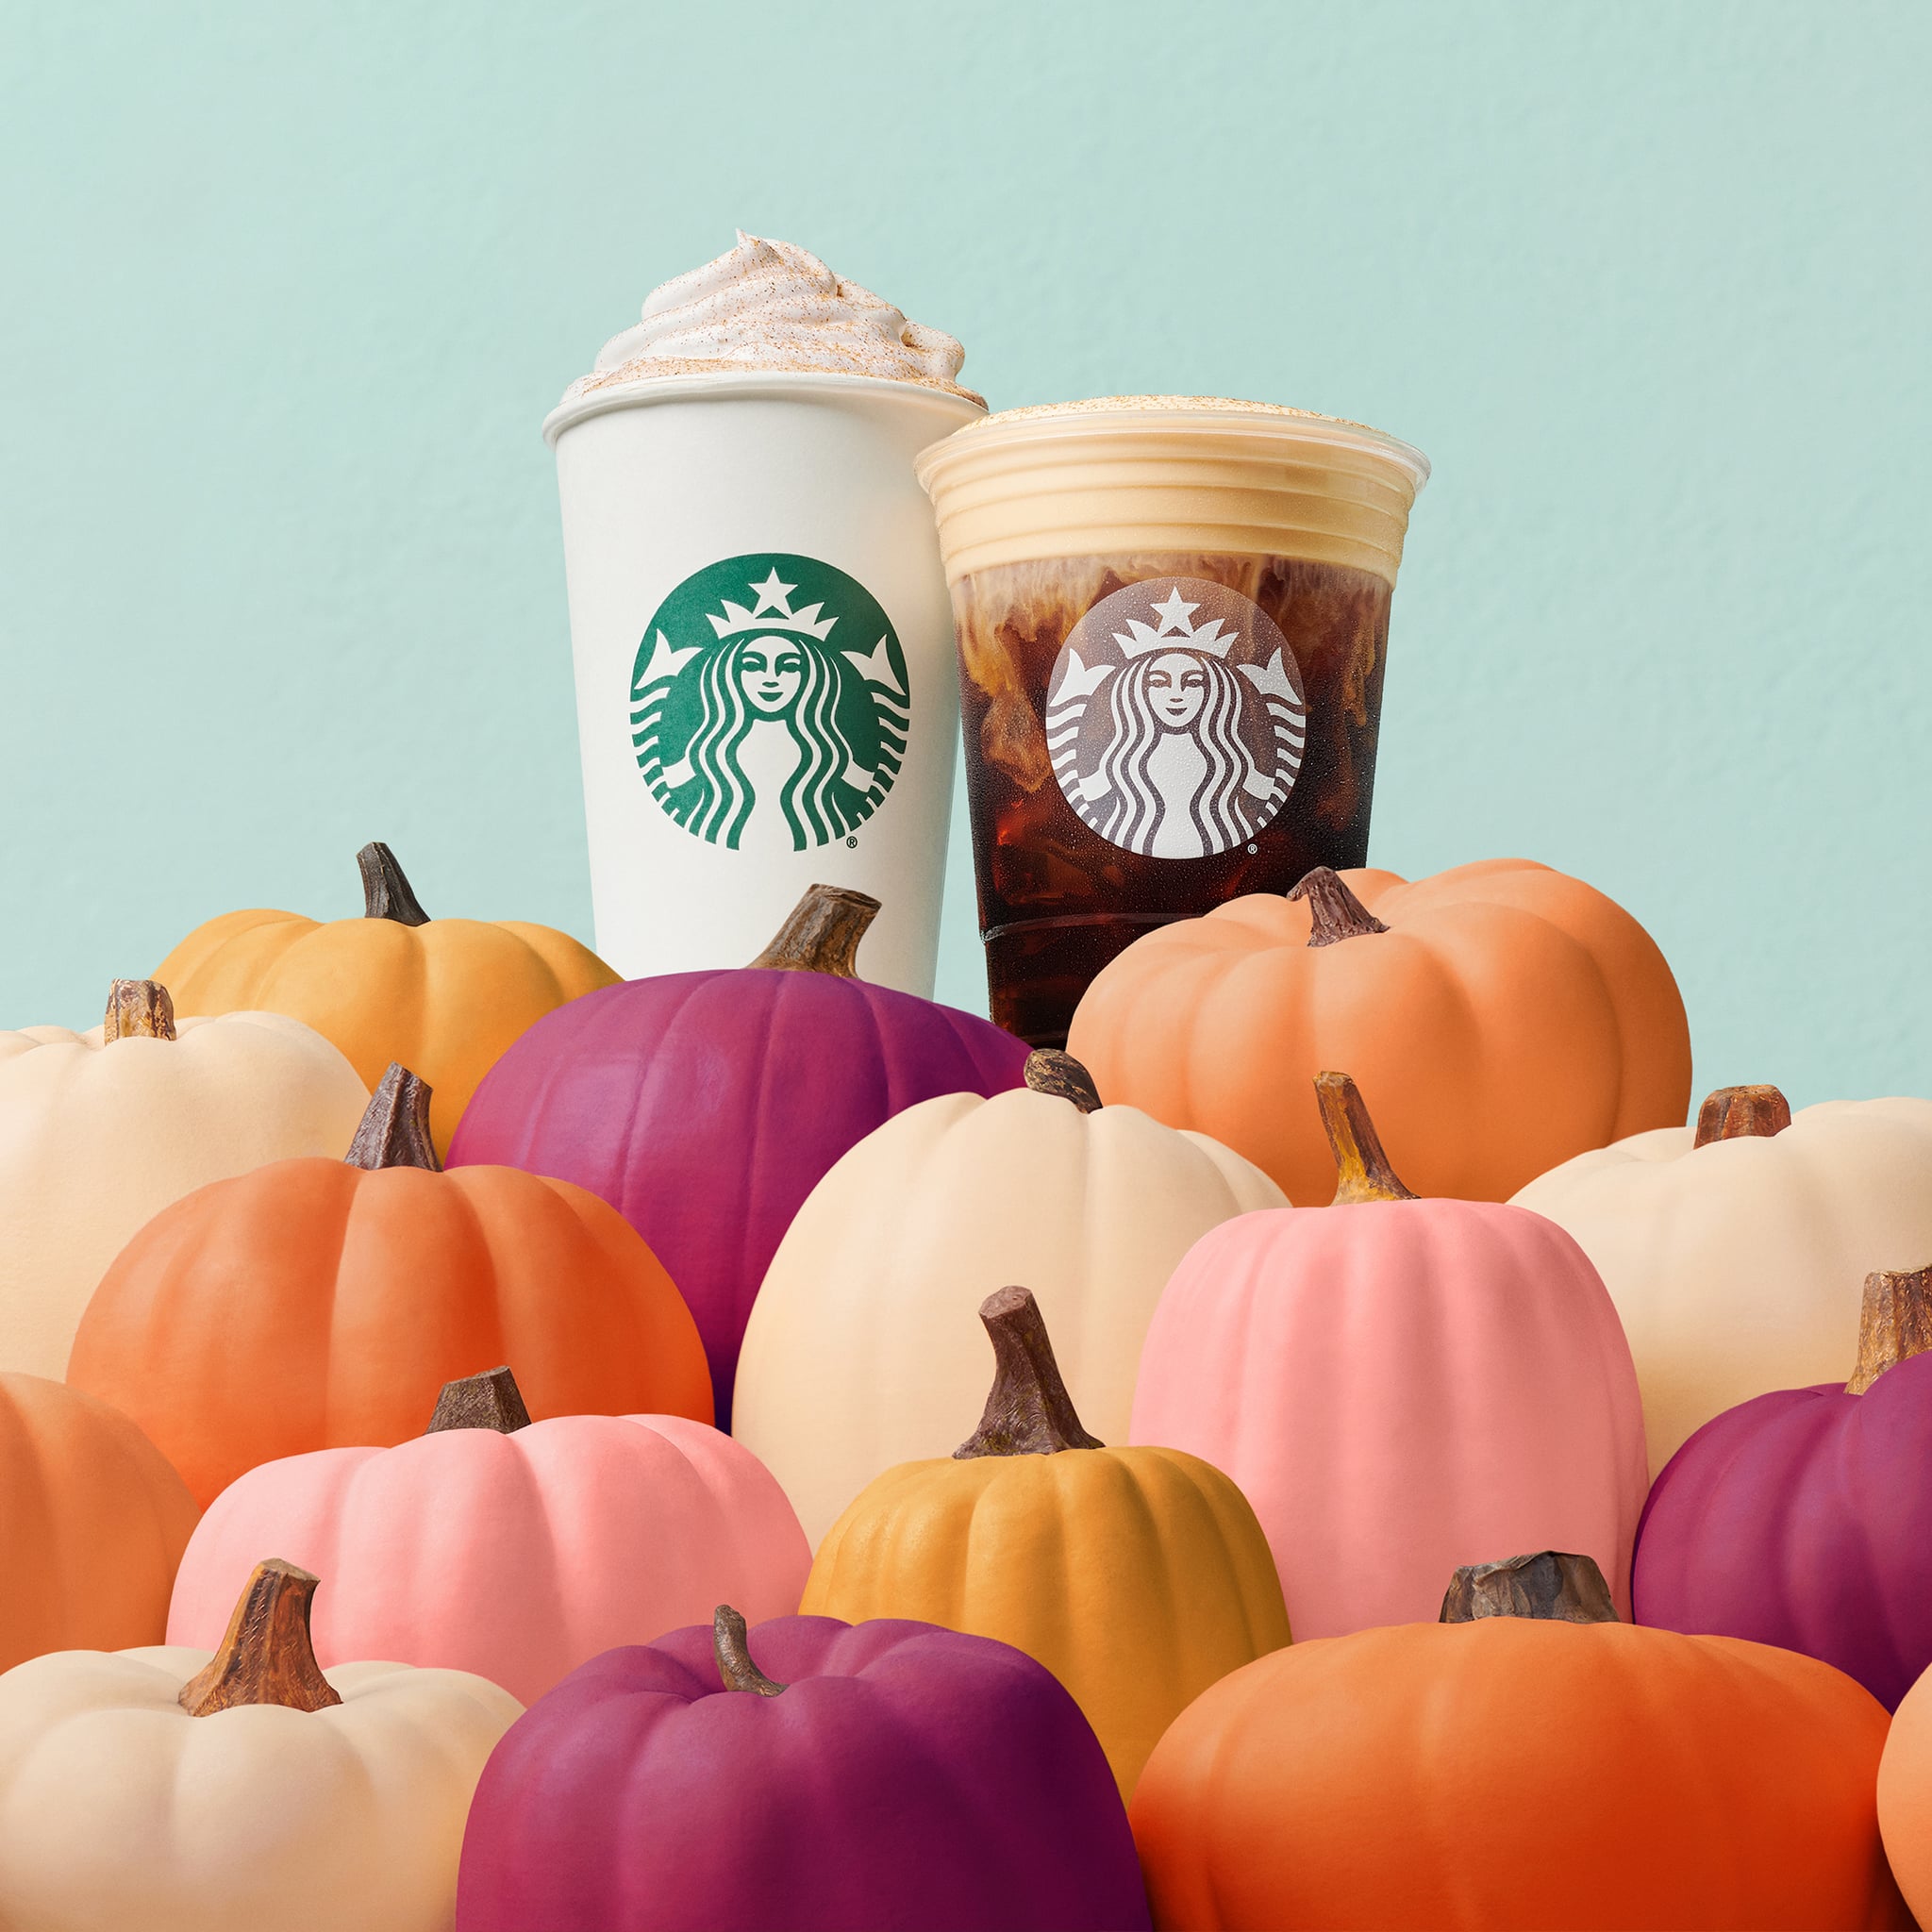 Does Starbucks Have Pumpkin